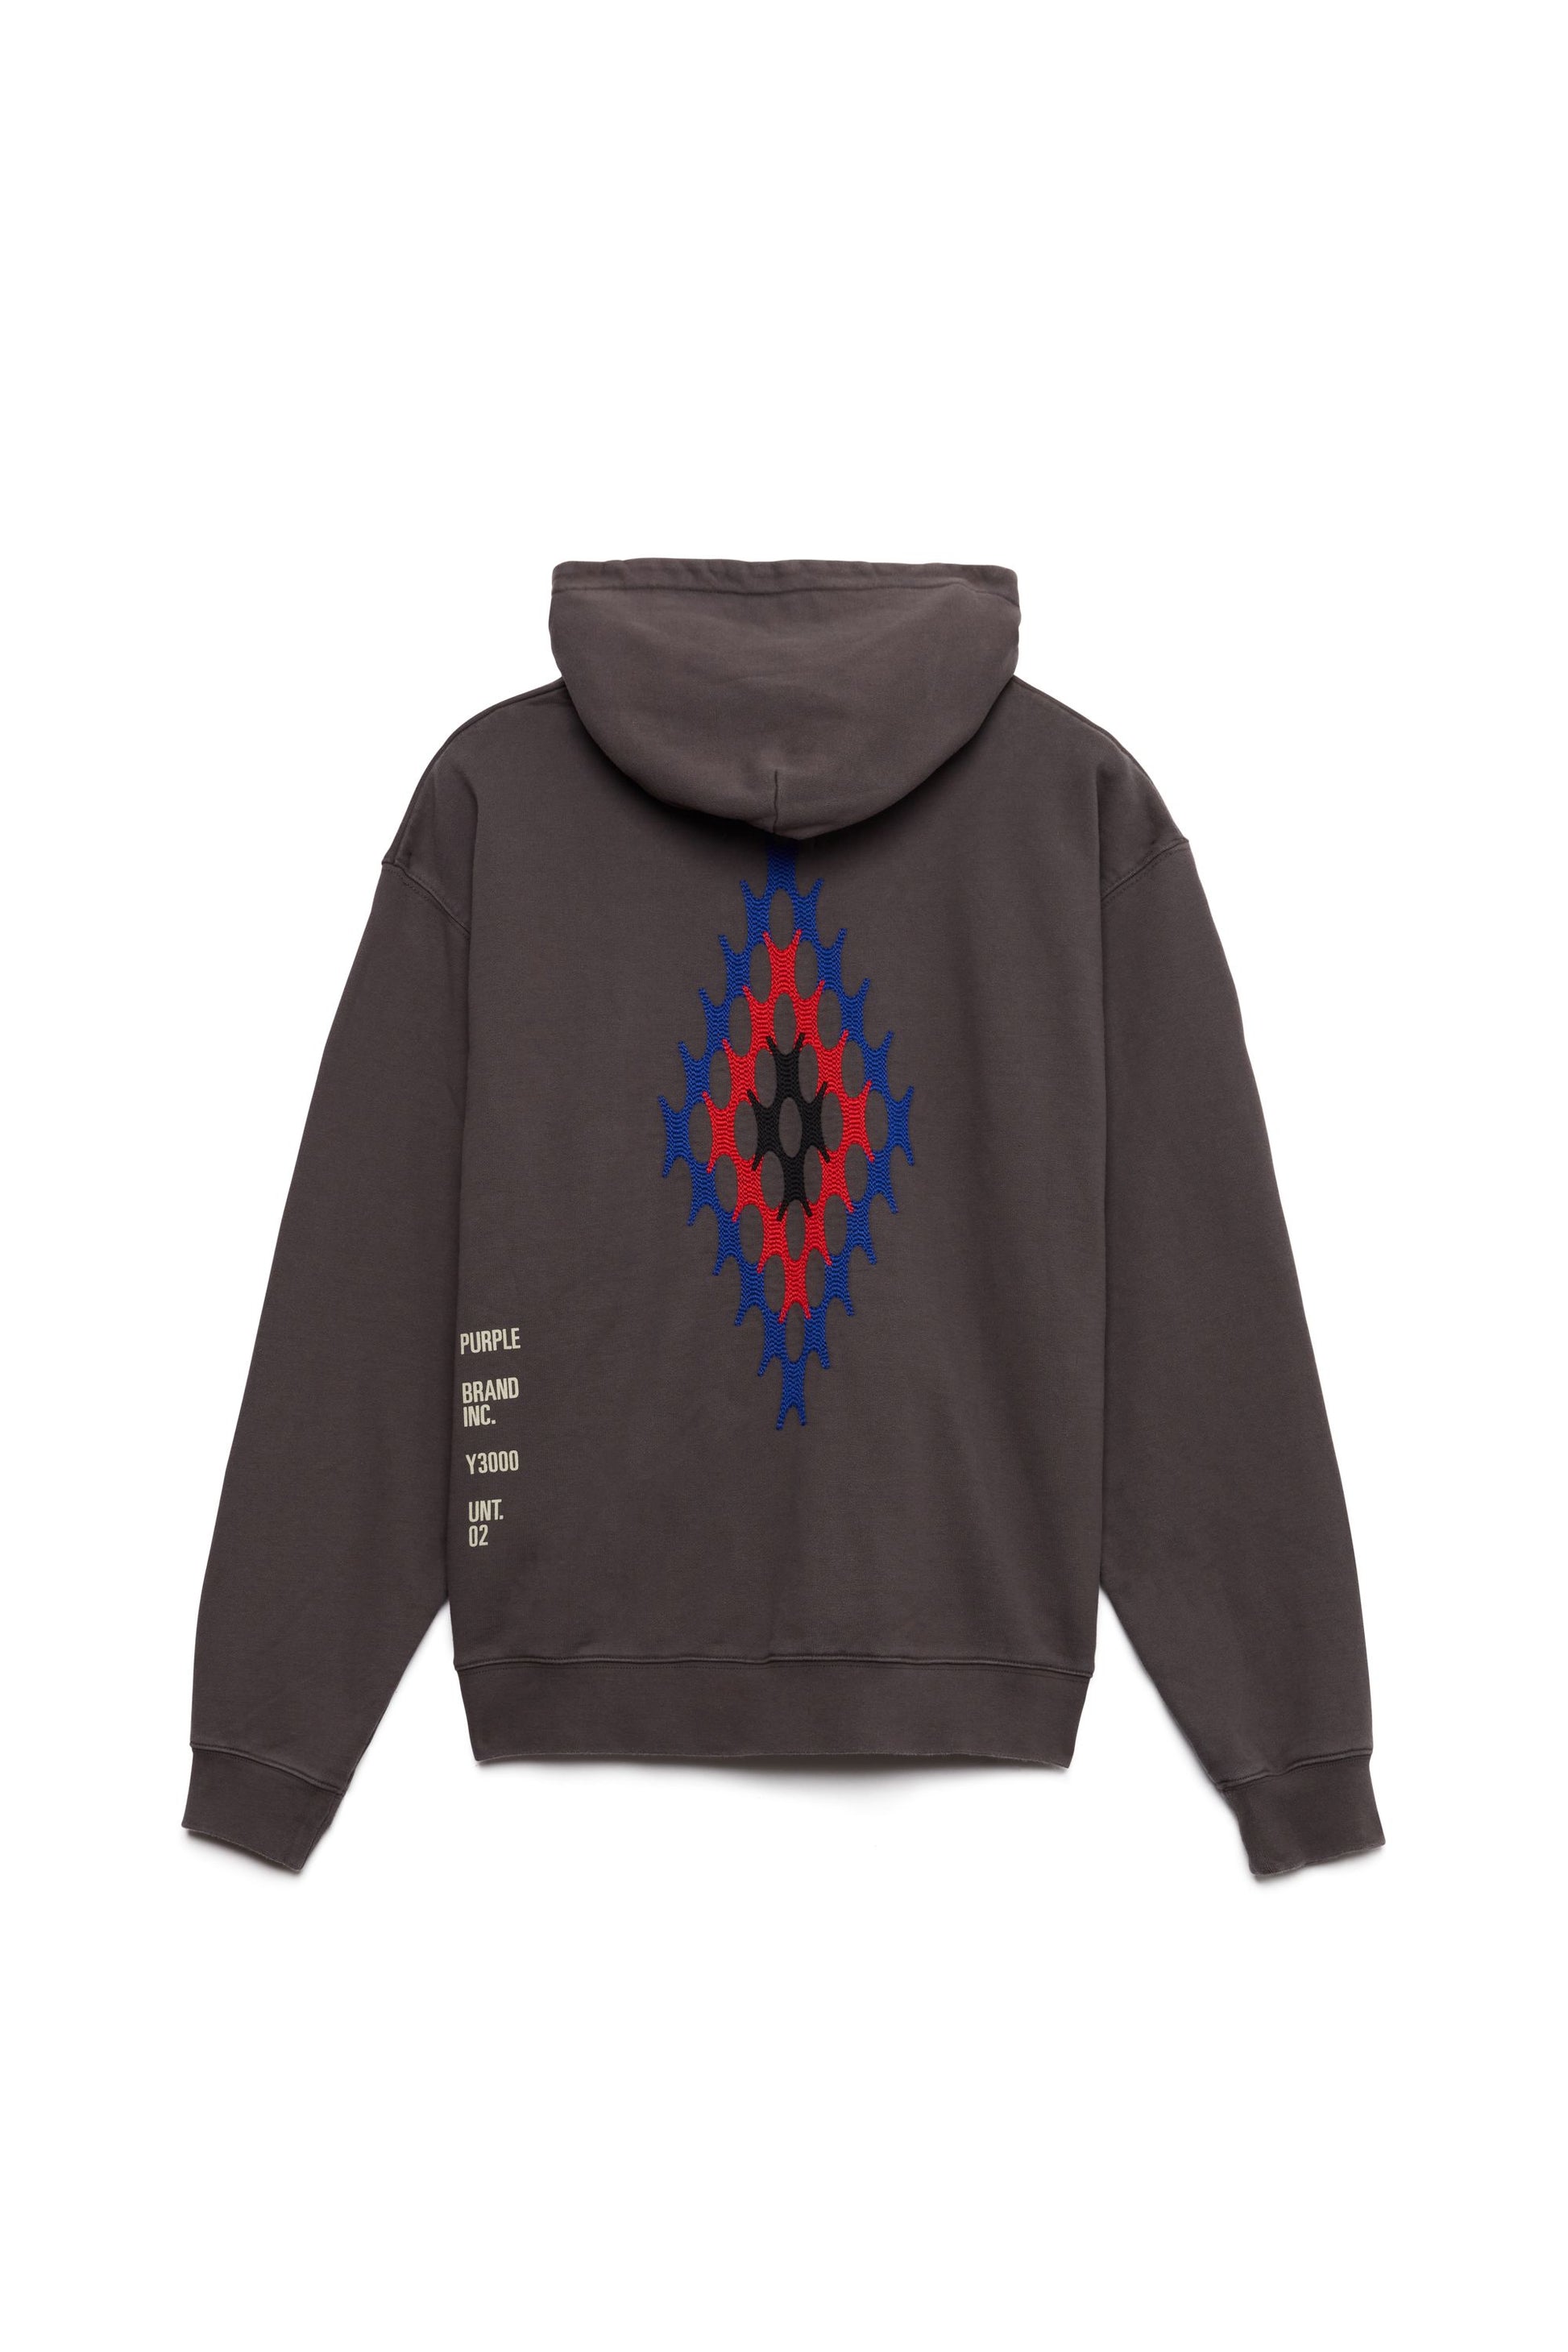 PURPLE BRAND - Men's Hoodie Sweatshirt - Style No. P404 - Artifact Embroidered Hoodie Charcoal - Back